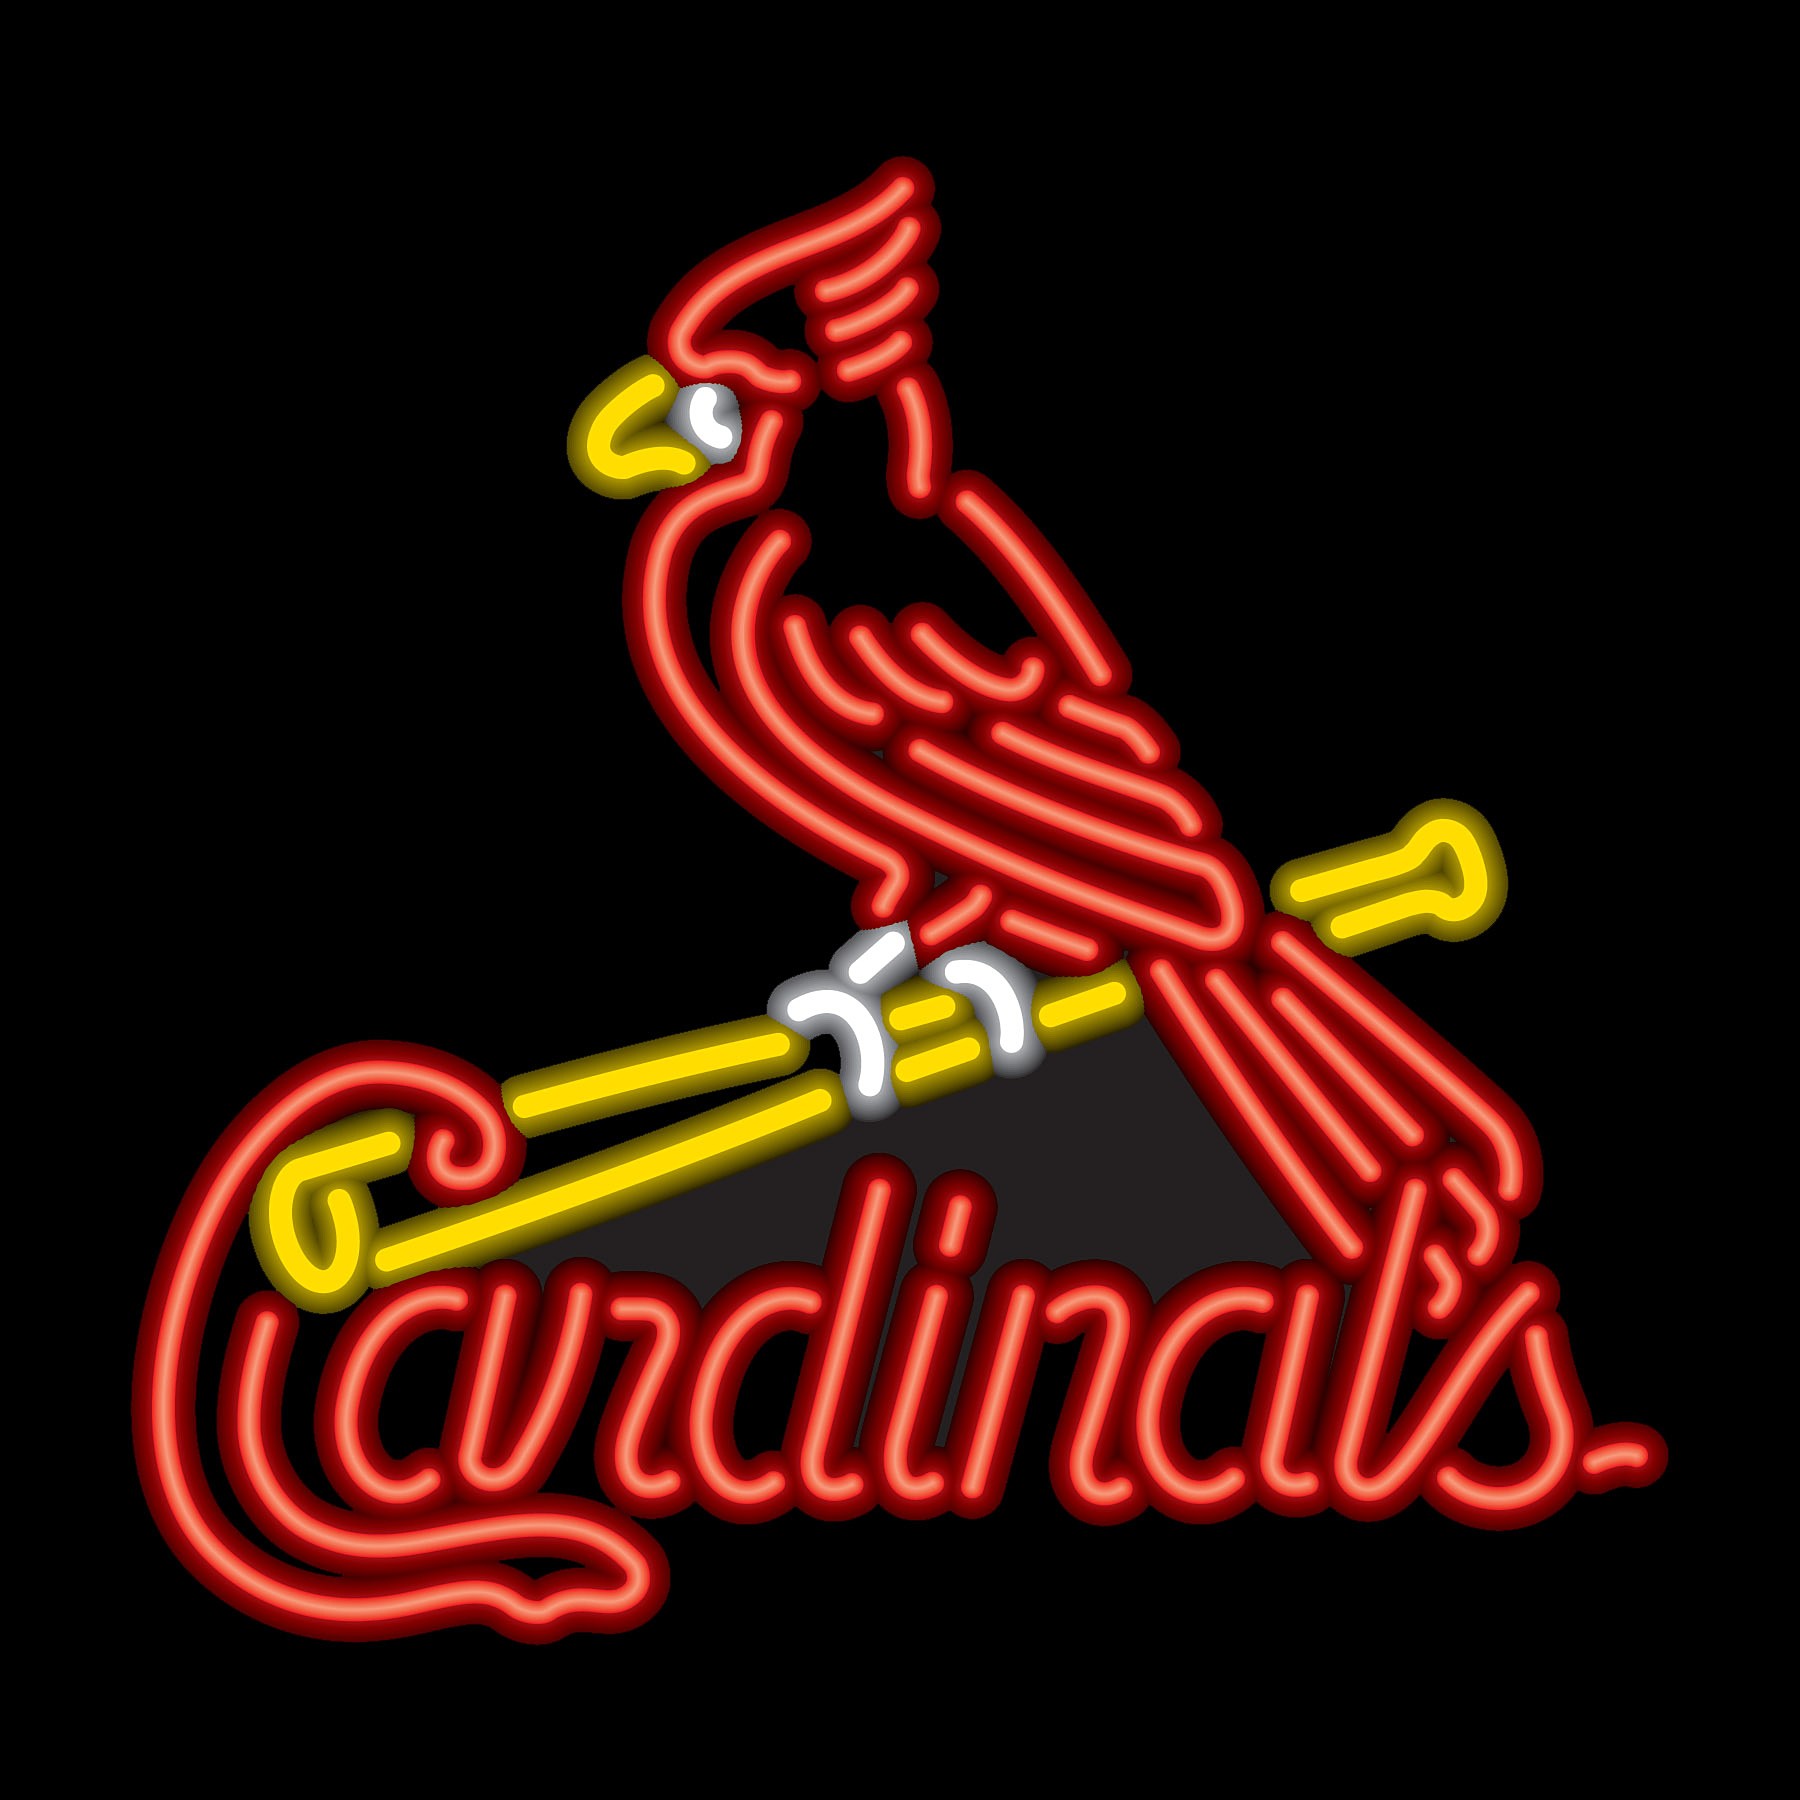 St Louis Cardinals Wallpaper Background